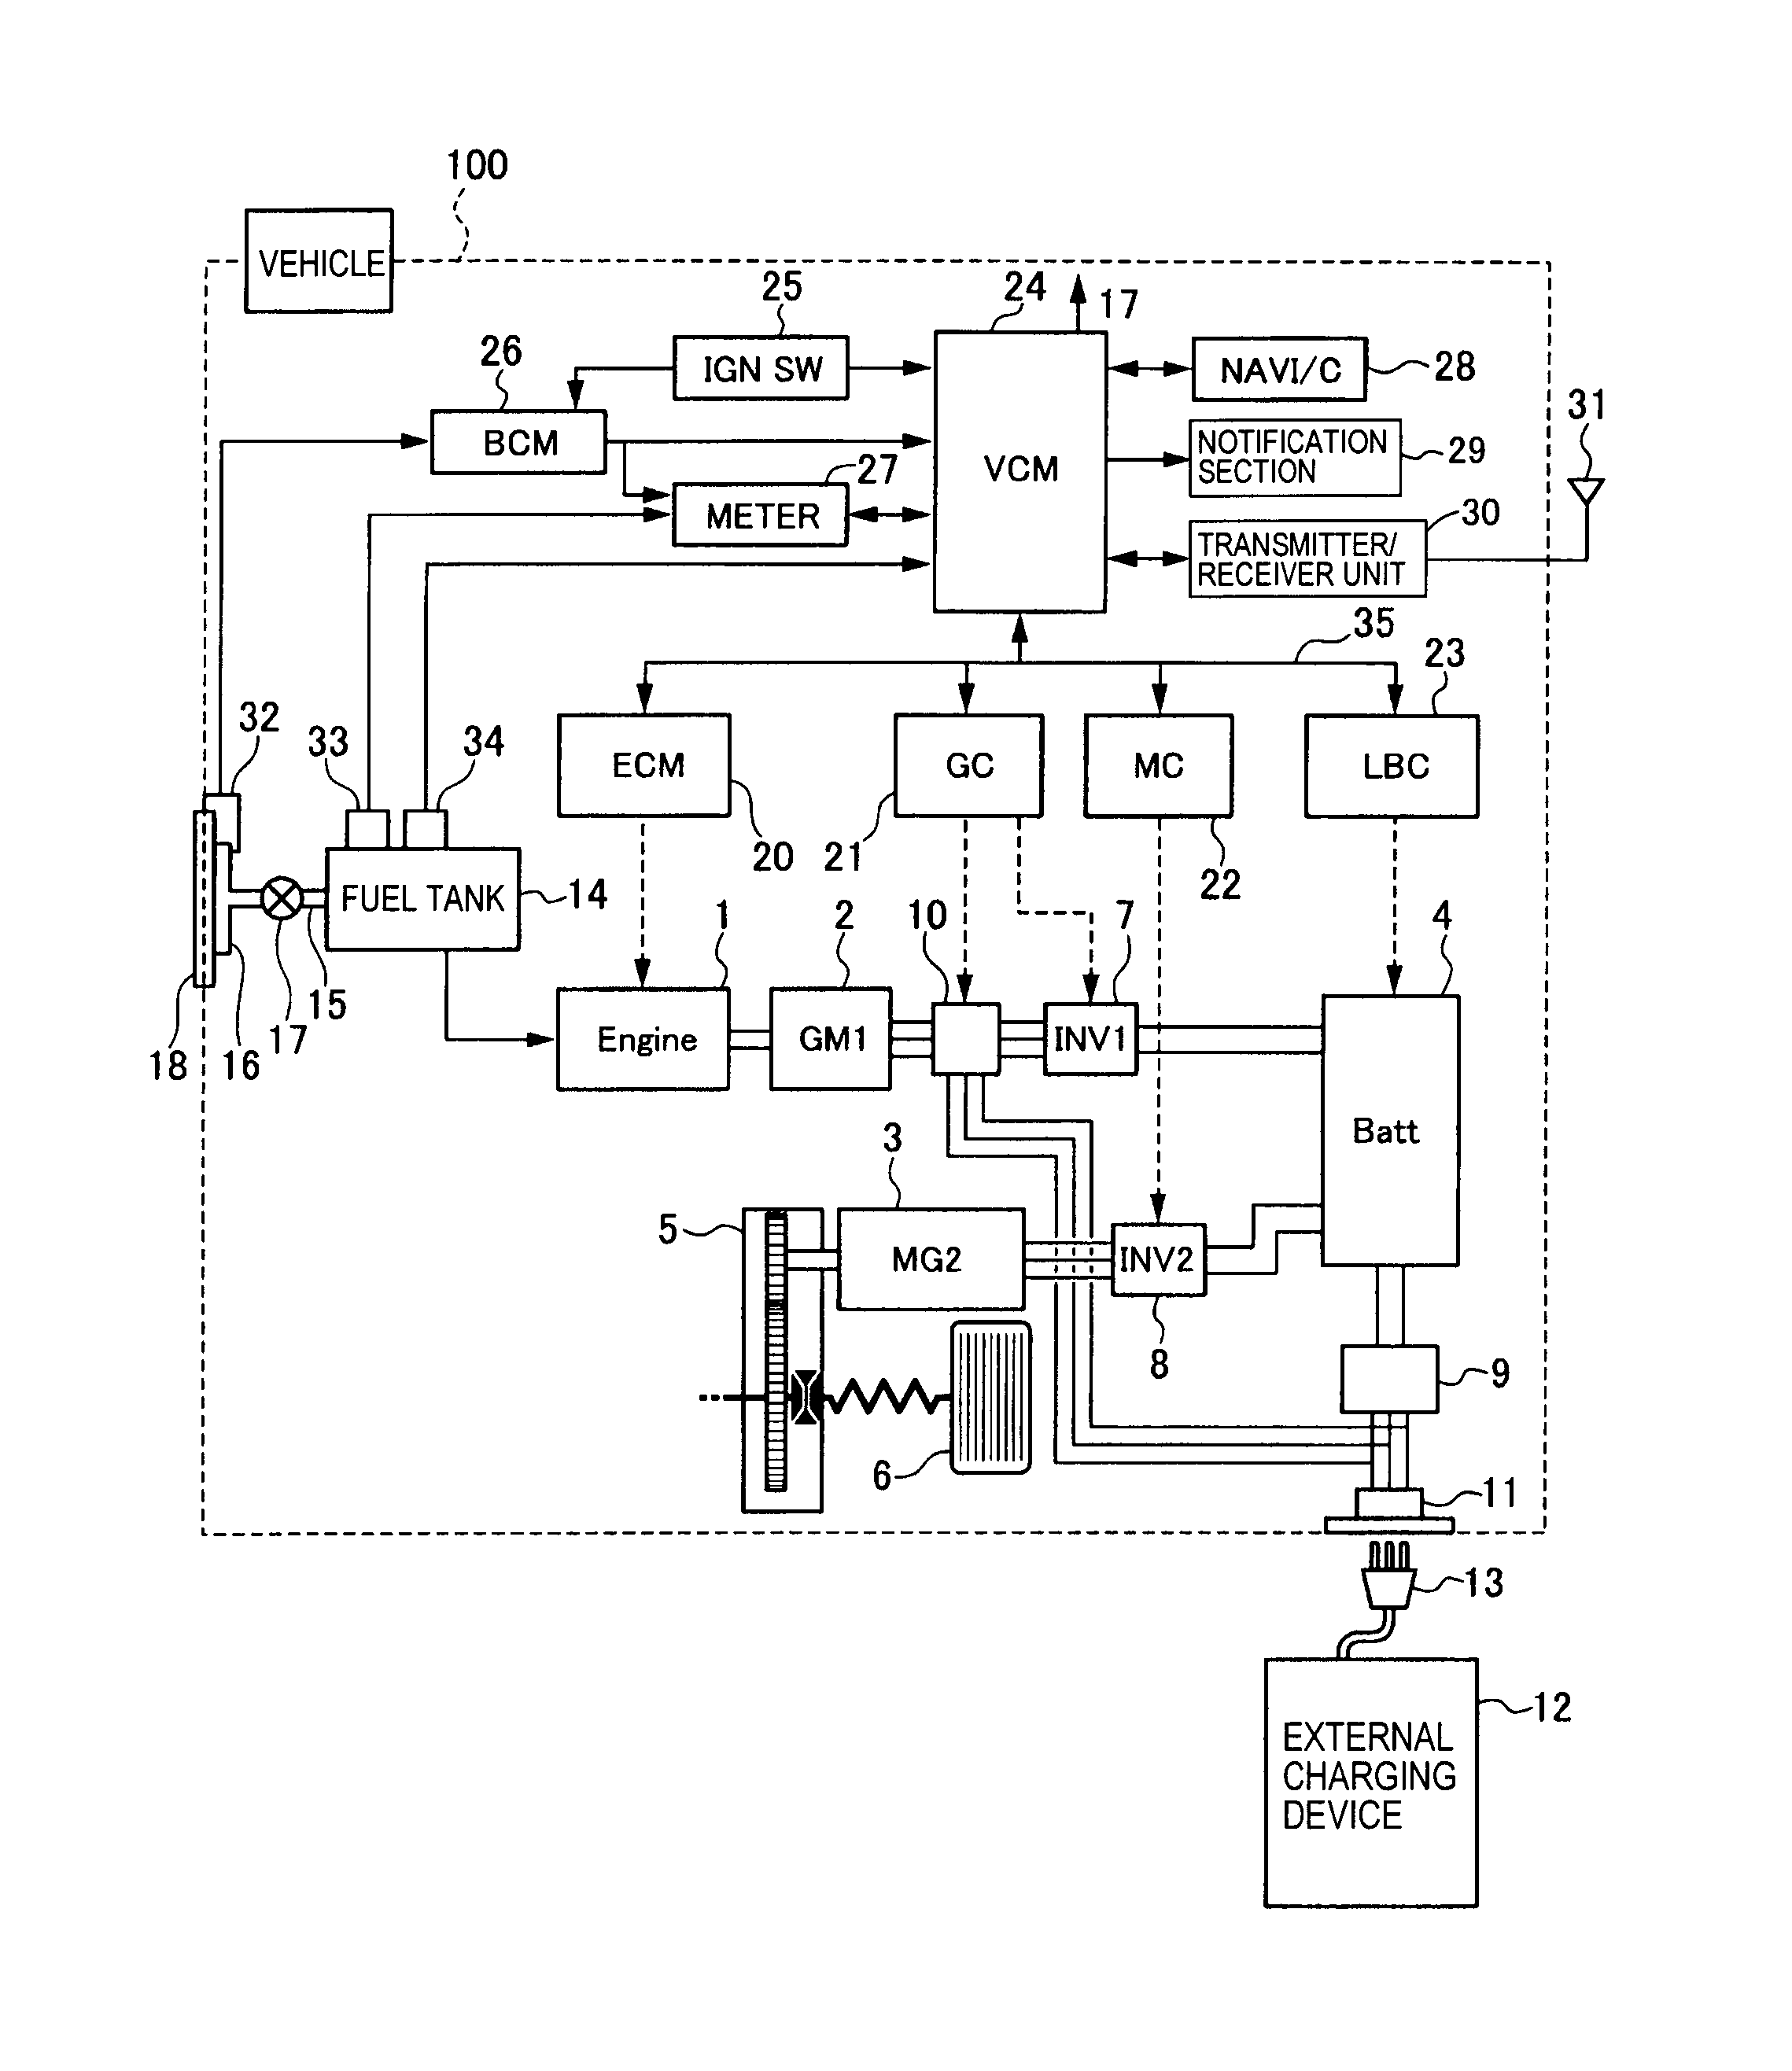 rd1-rs-tf-56-4-b-c-.5 wiring diagram